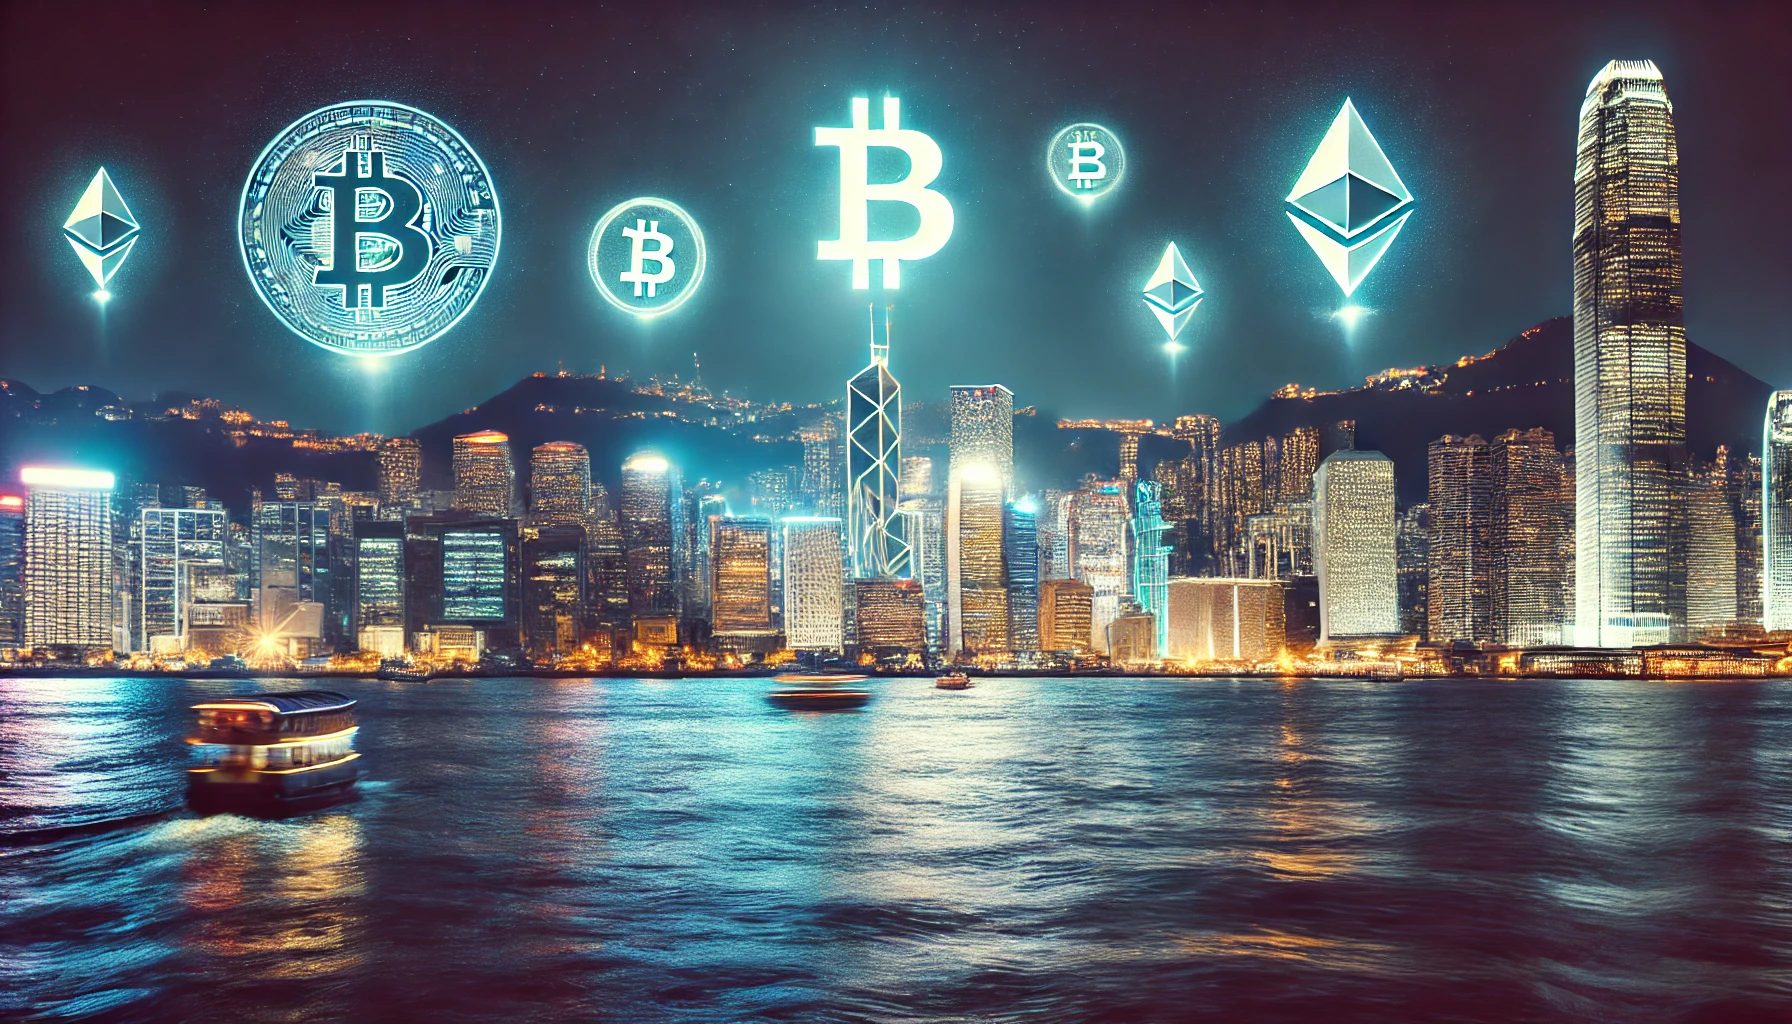 Hong Kong to adapt crypto regulations to evolving industry